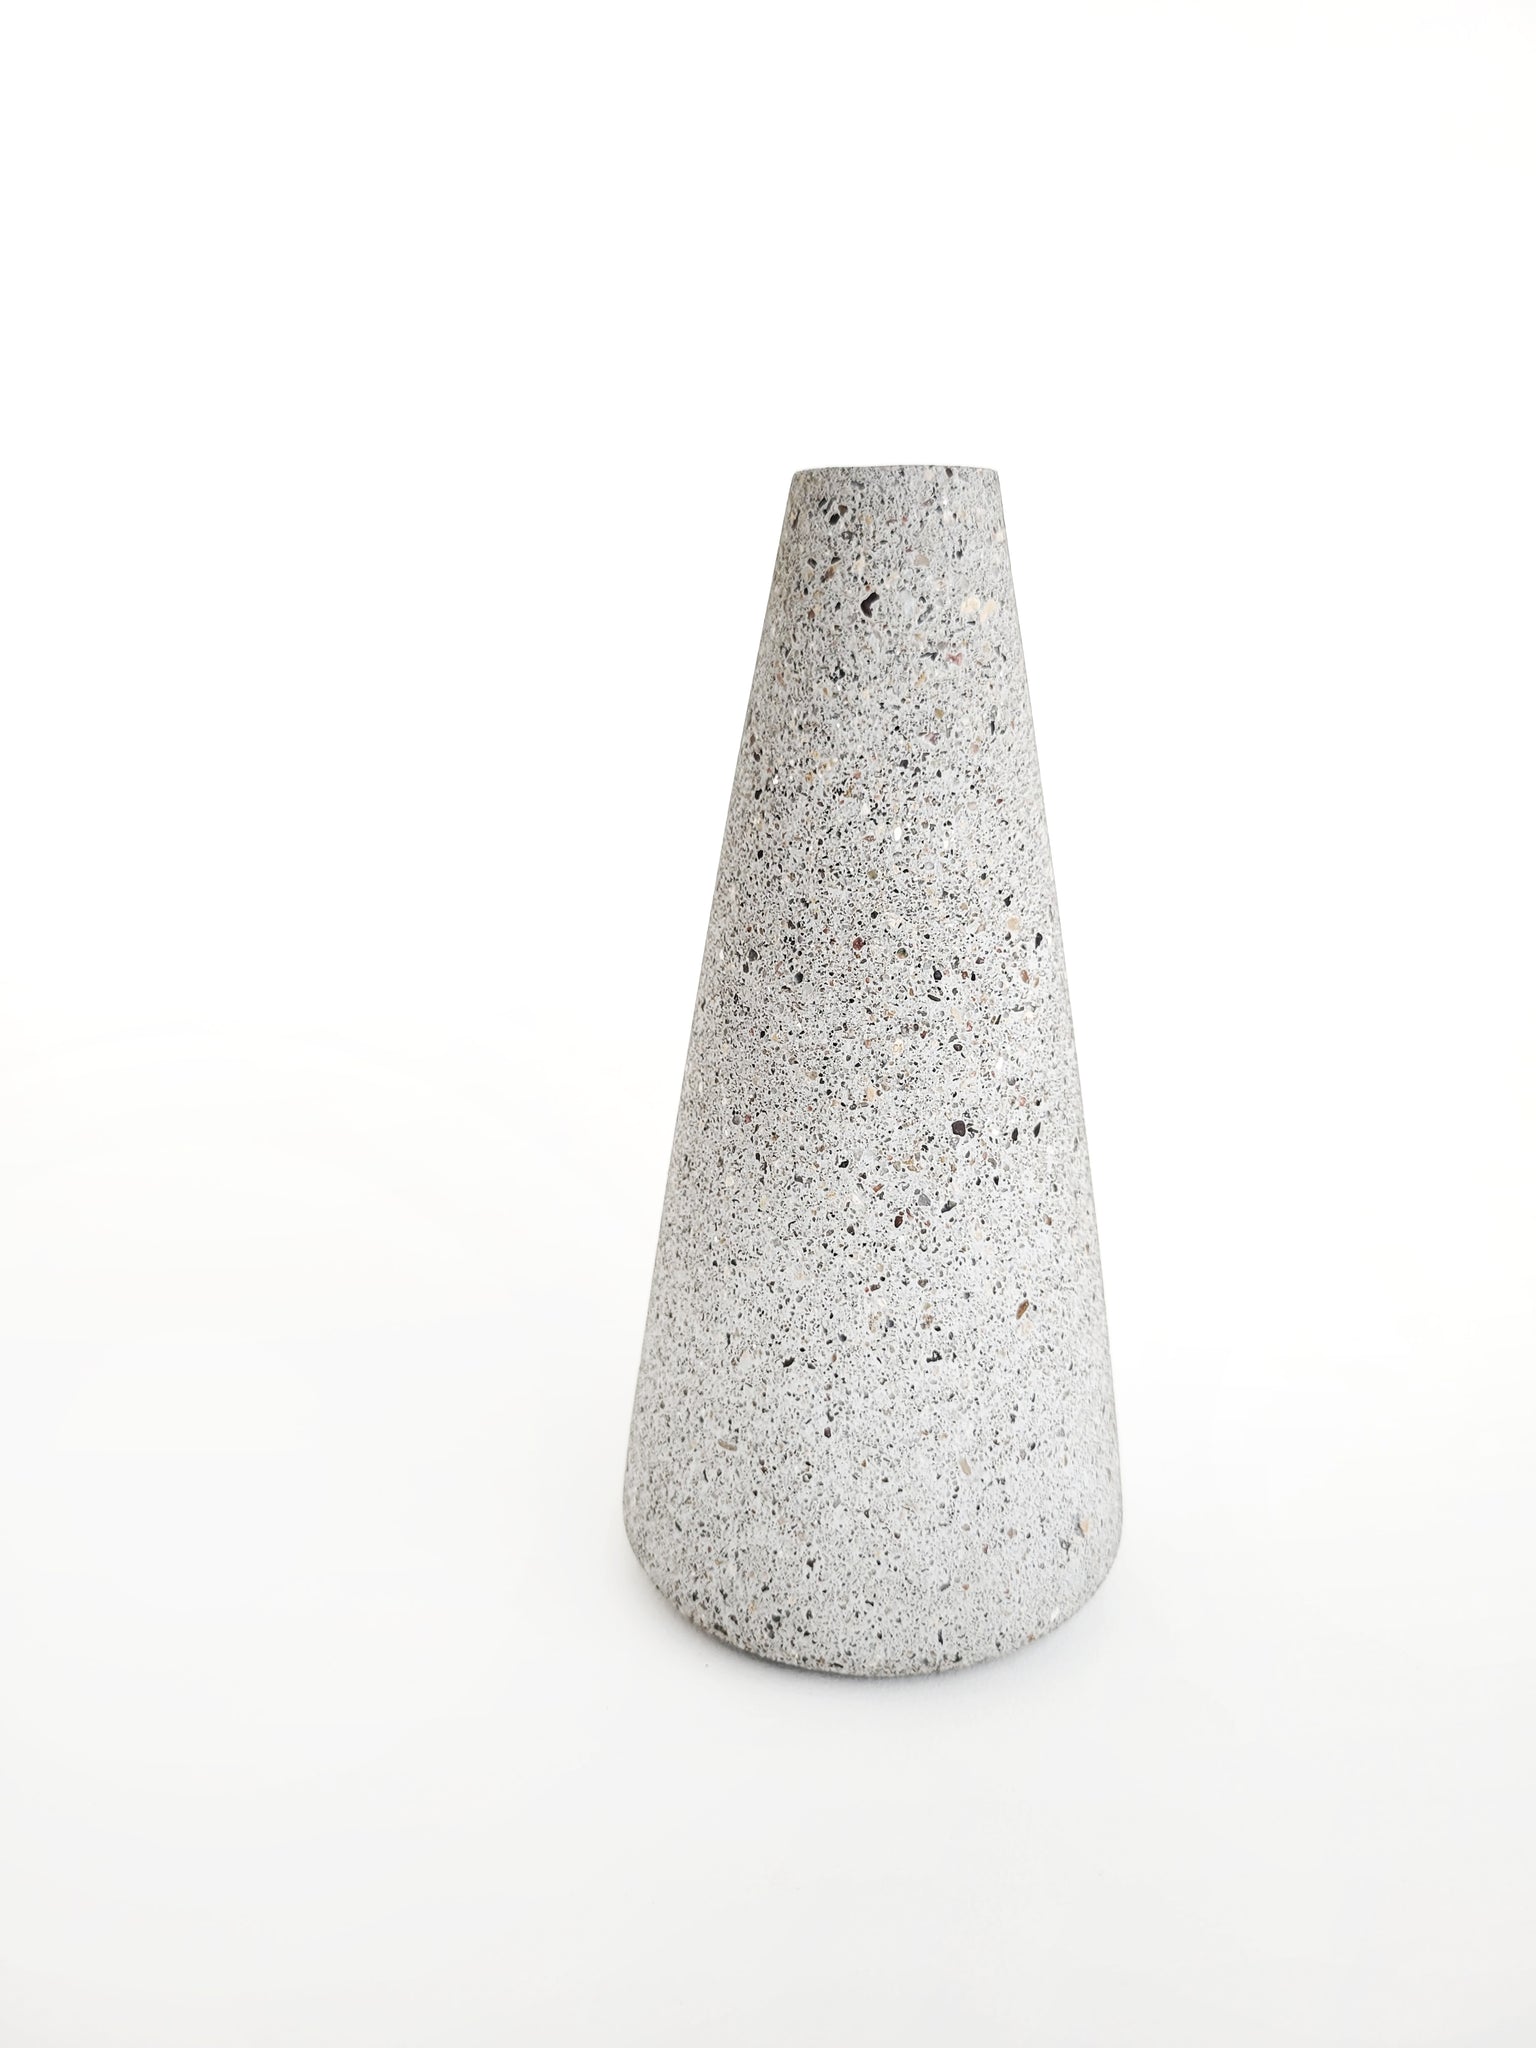 Sandstone Bud Vase Tall Taper